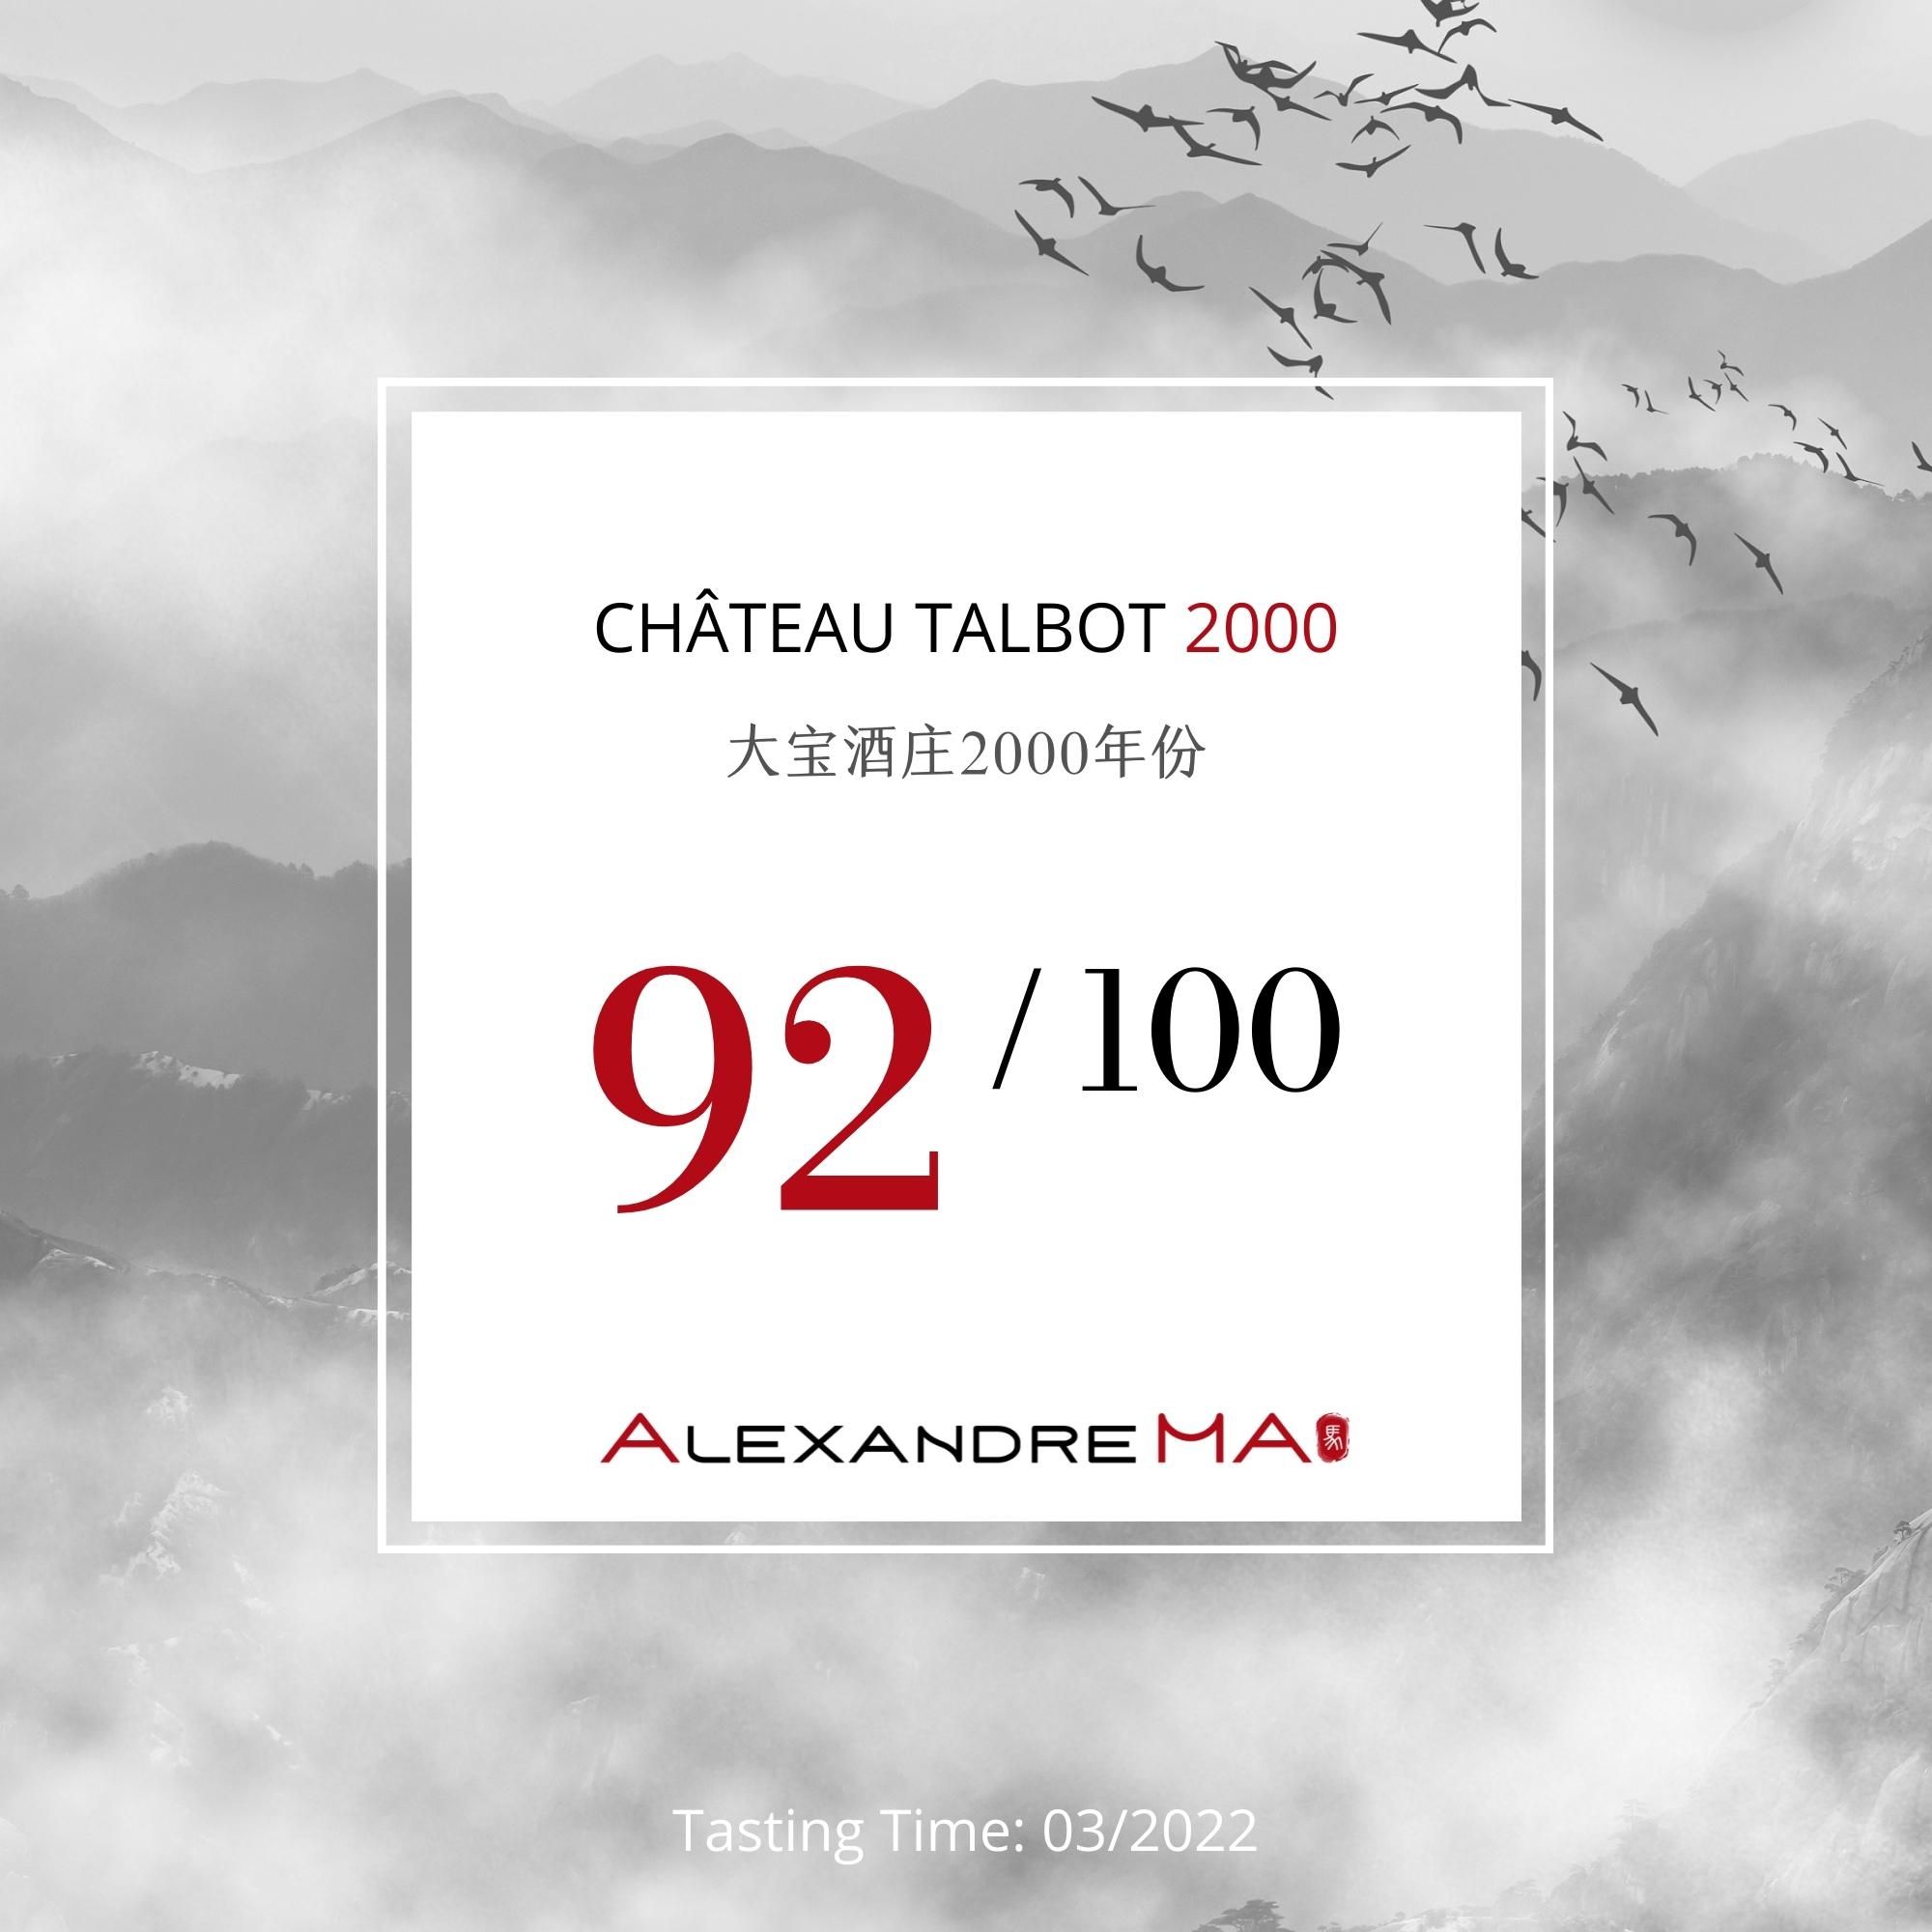 Château Talbot 2000 - Alexandre MA